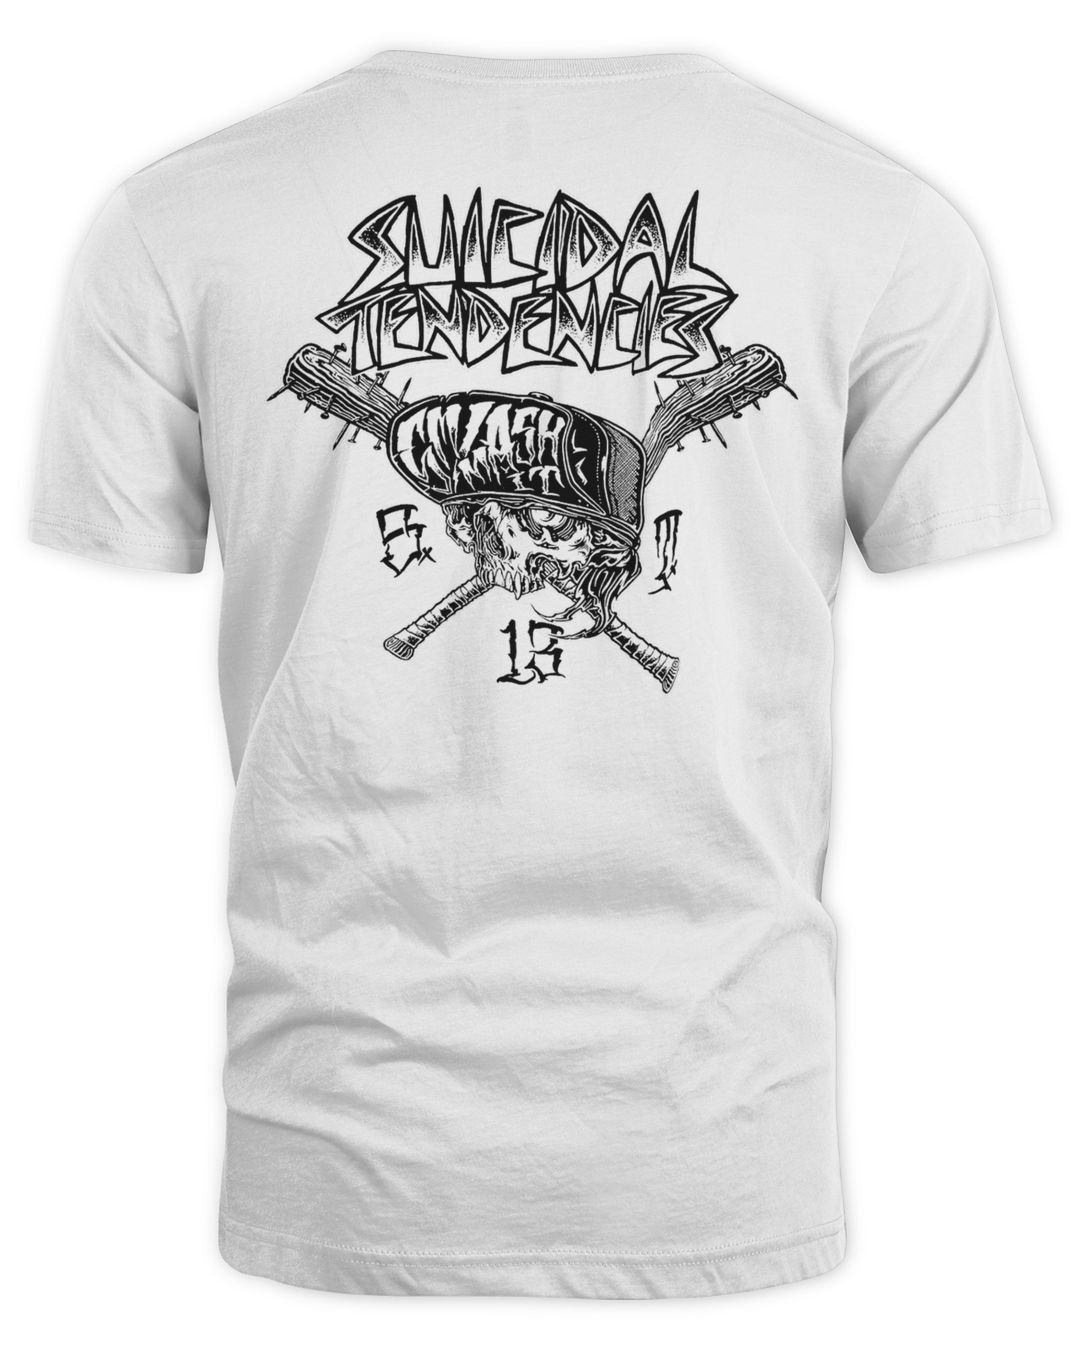 Suicidal Tendencies Merch Ts Stmm Smash It Metalmulisha Collab Shirt